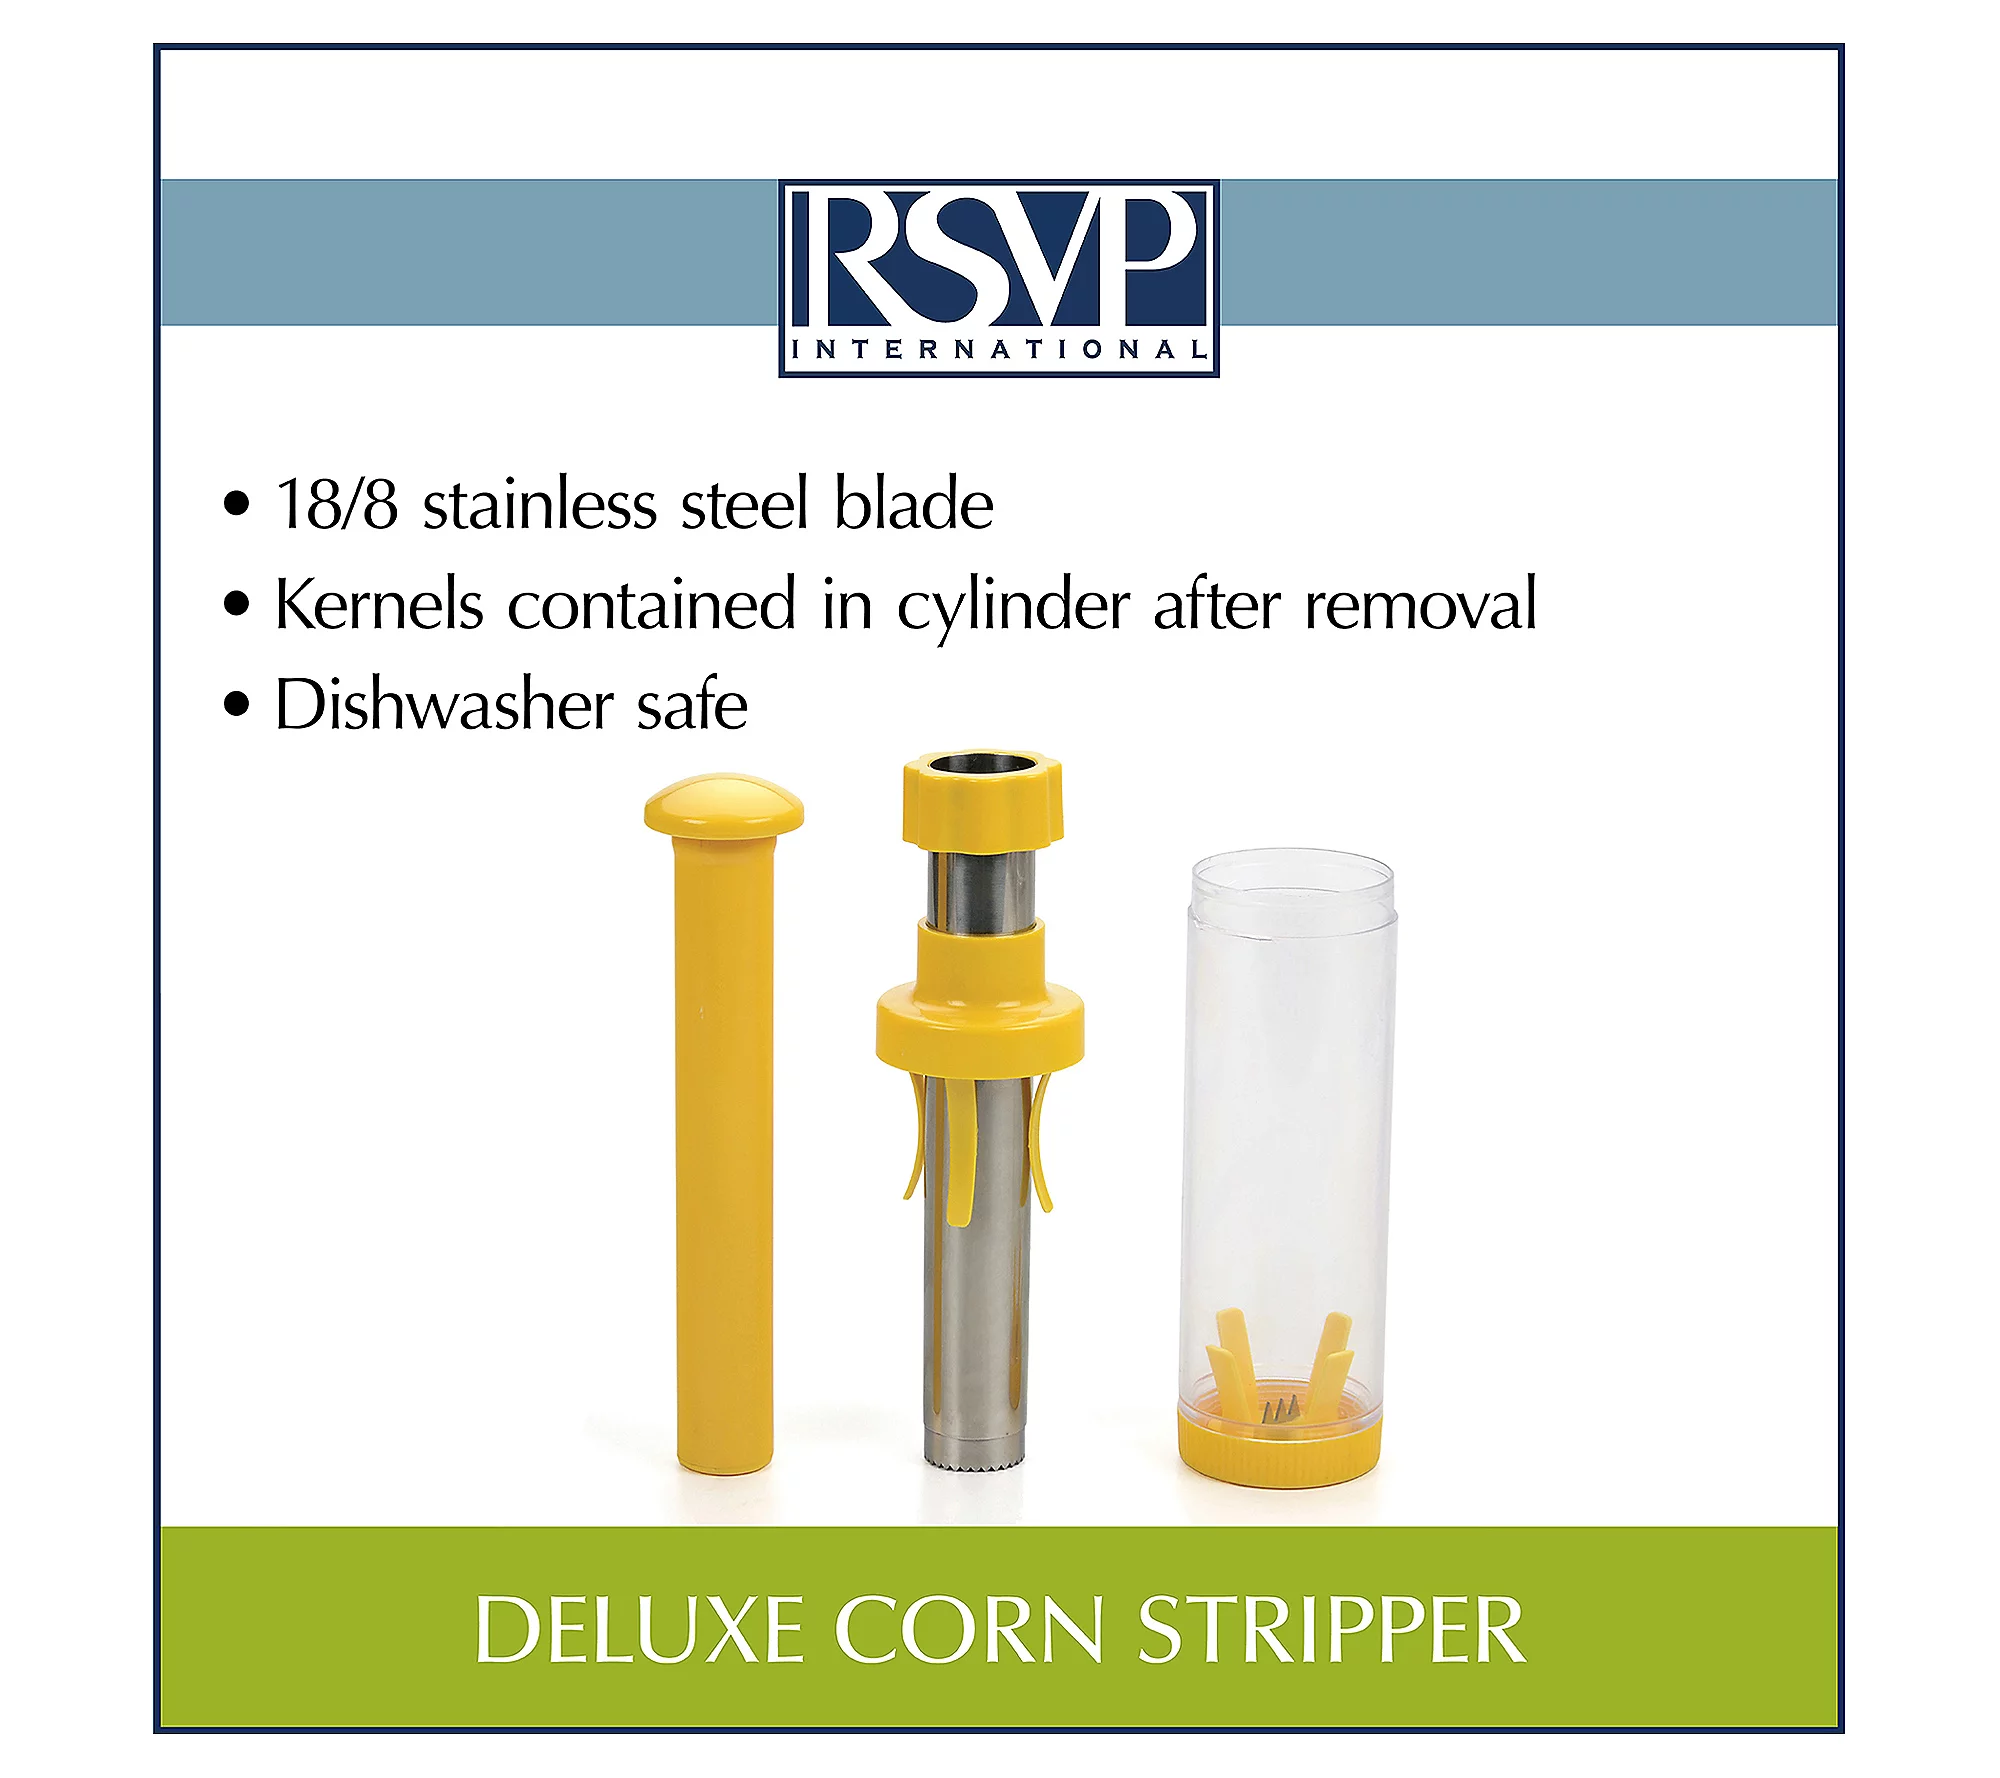 RSVP Deluxe Corn Stripper